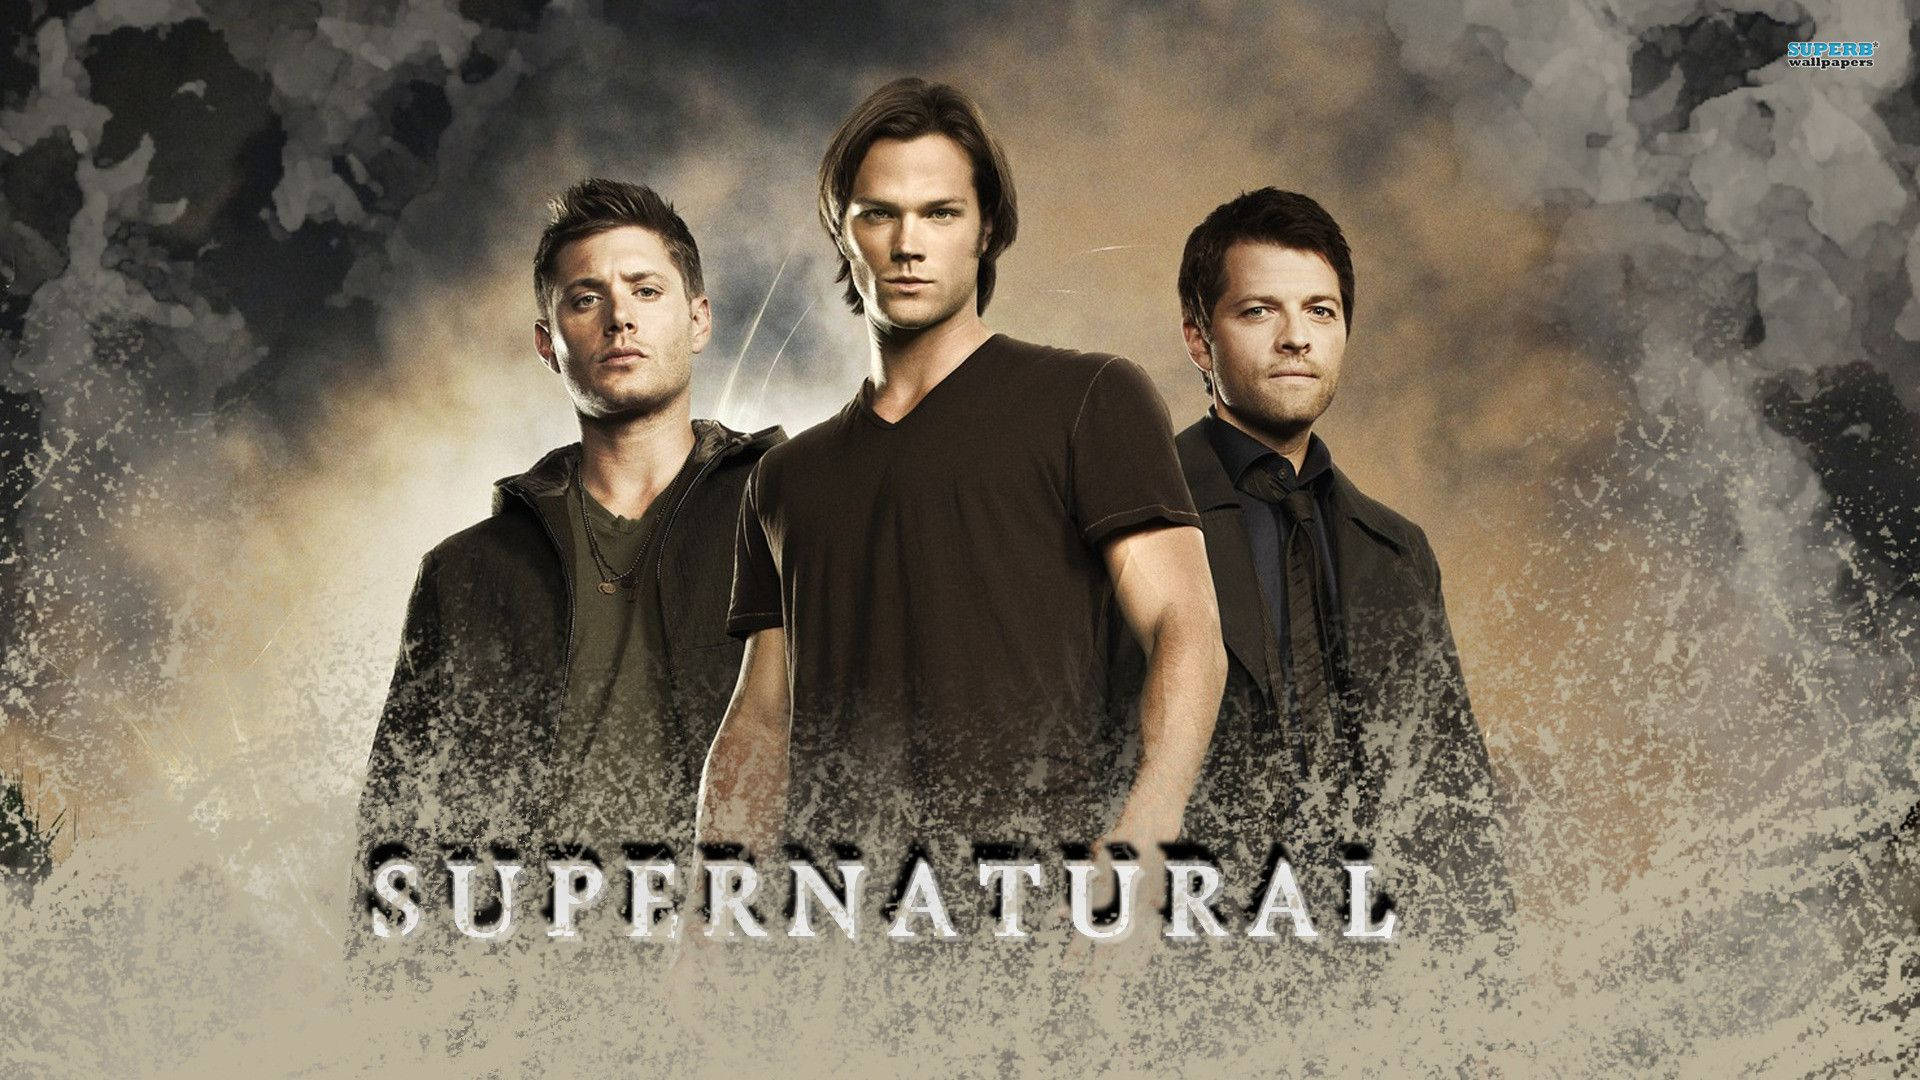 “The power of three: Sam, Dean, and Castiel” Wallpaper